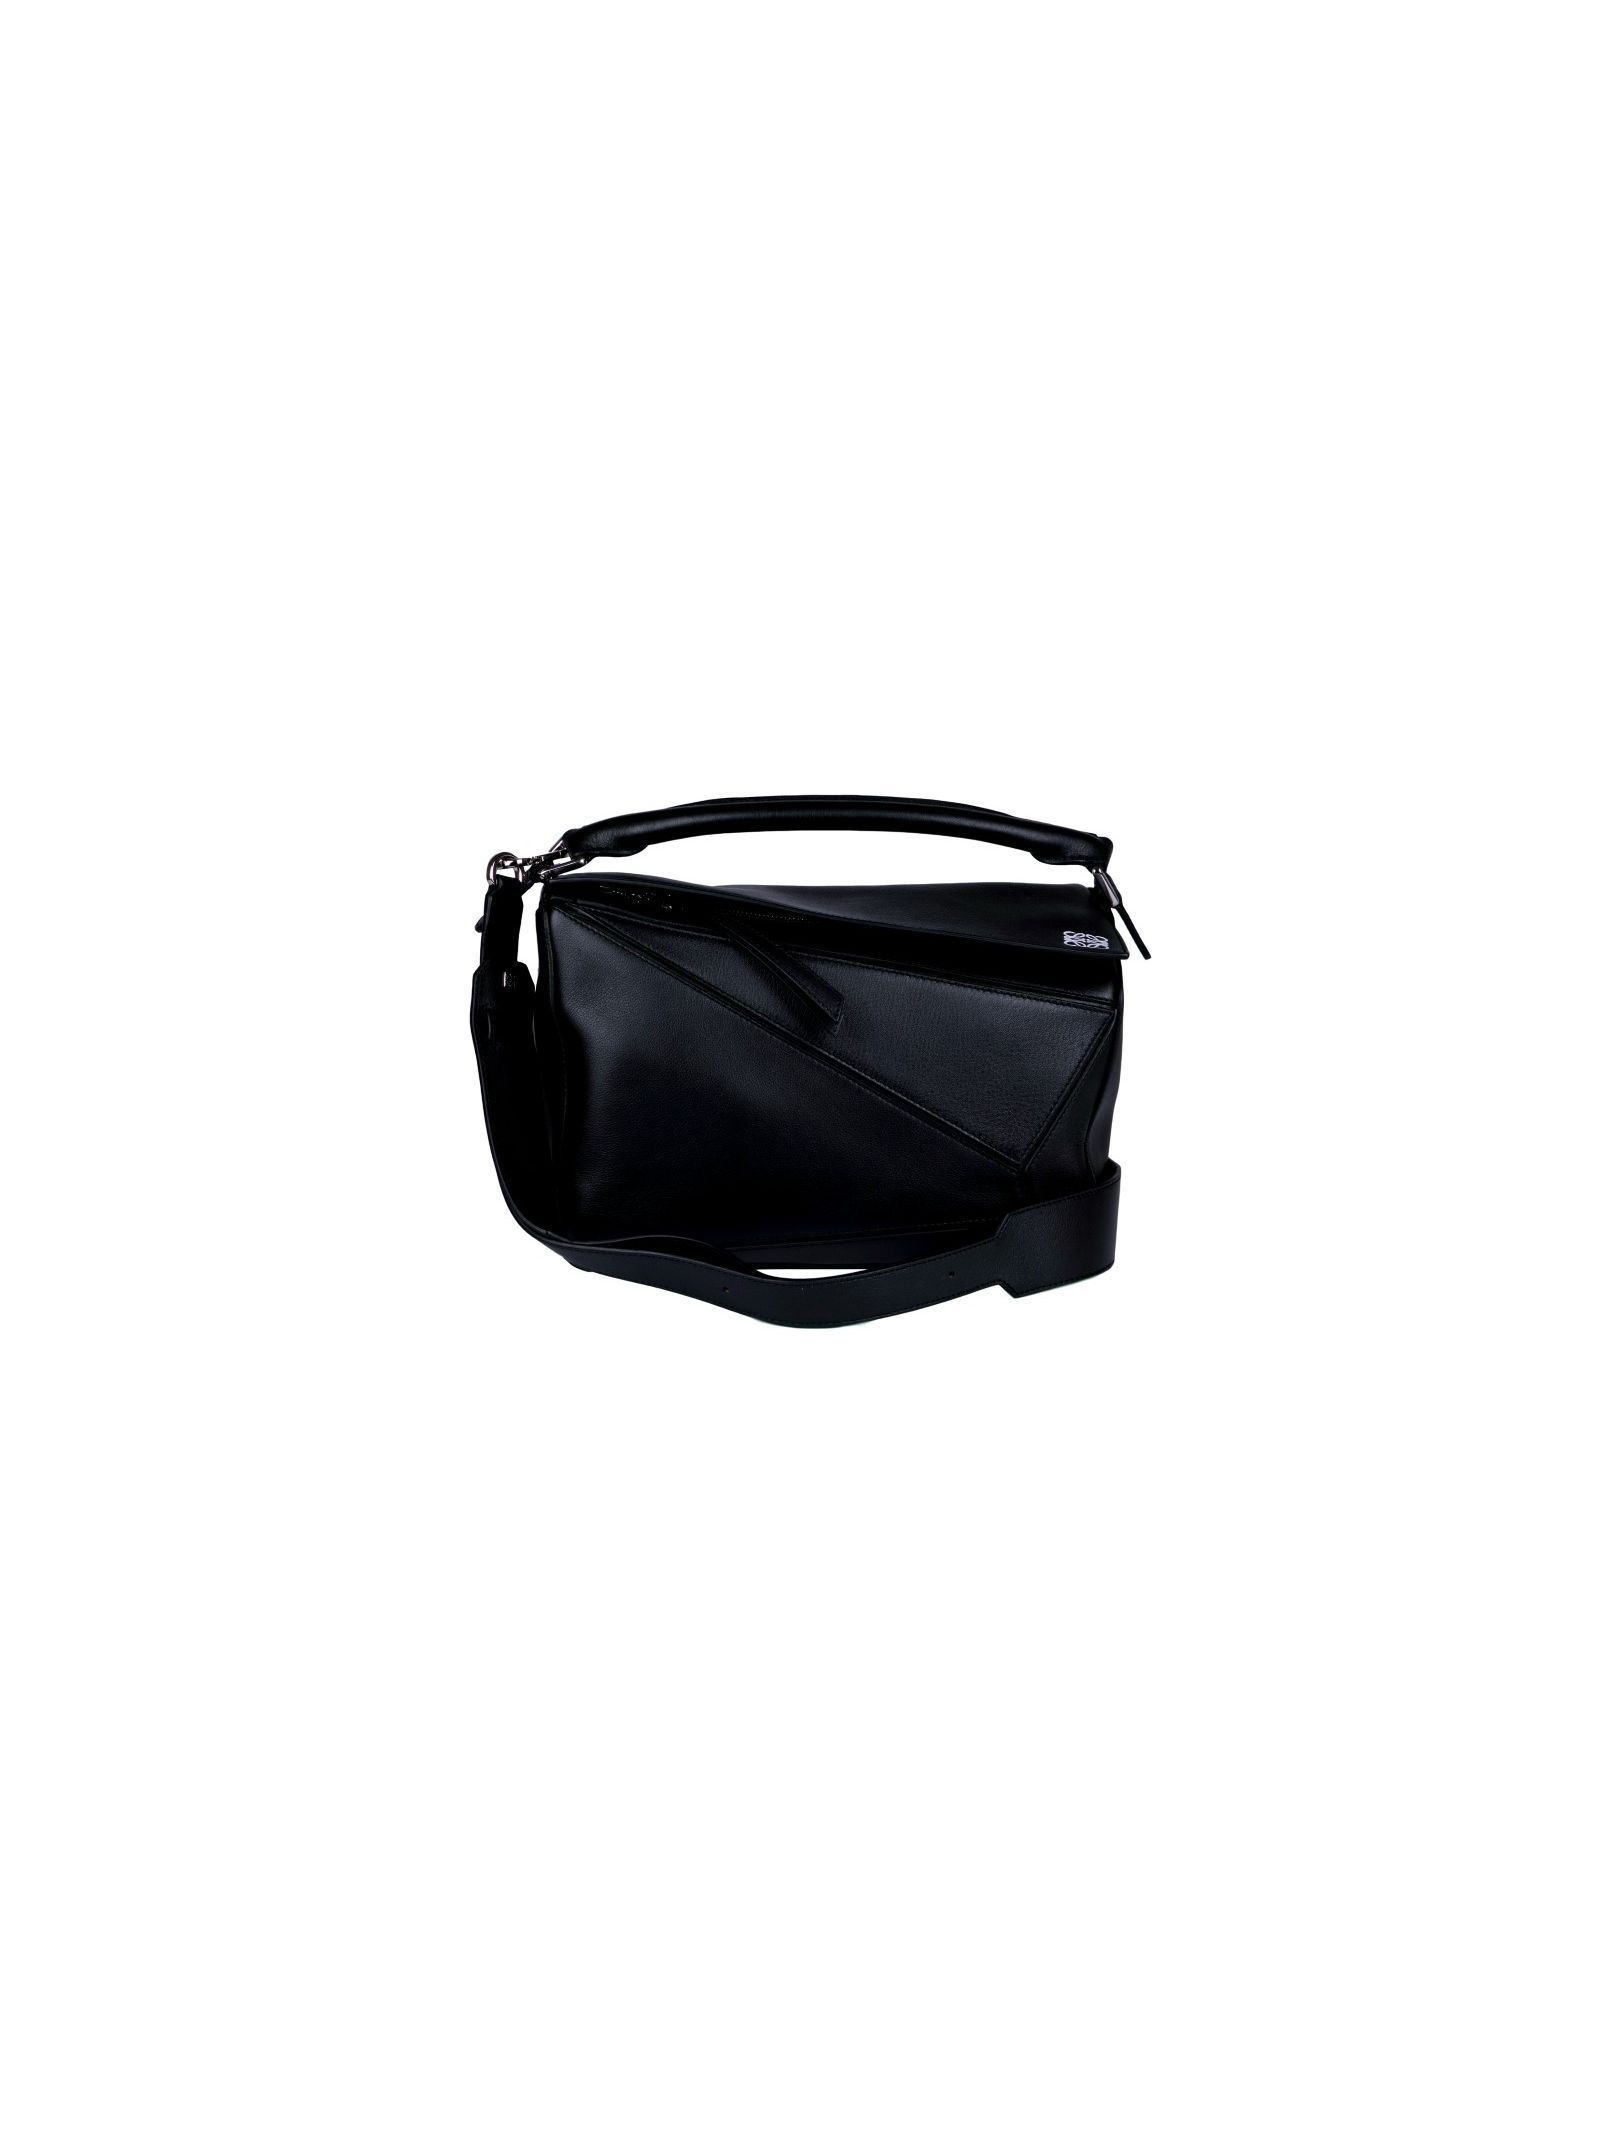 Loewe Puzzle Shoulder Bag | Italist.com US